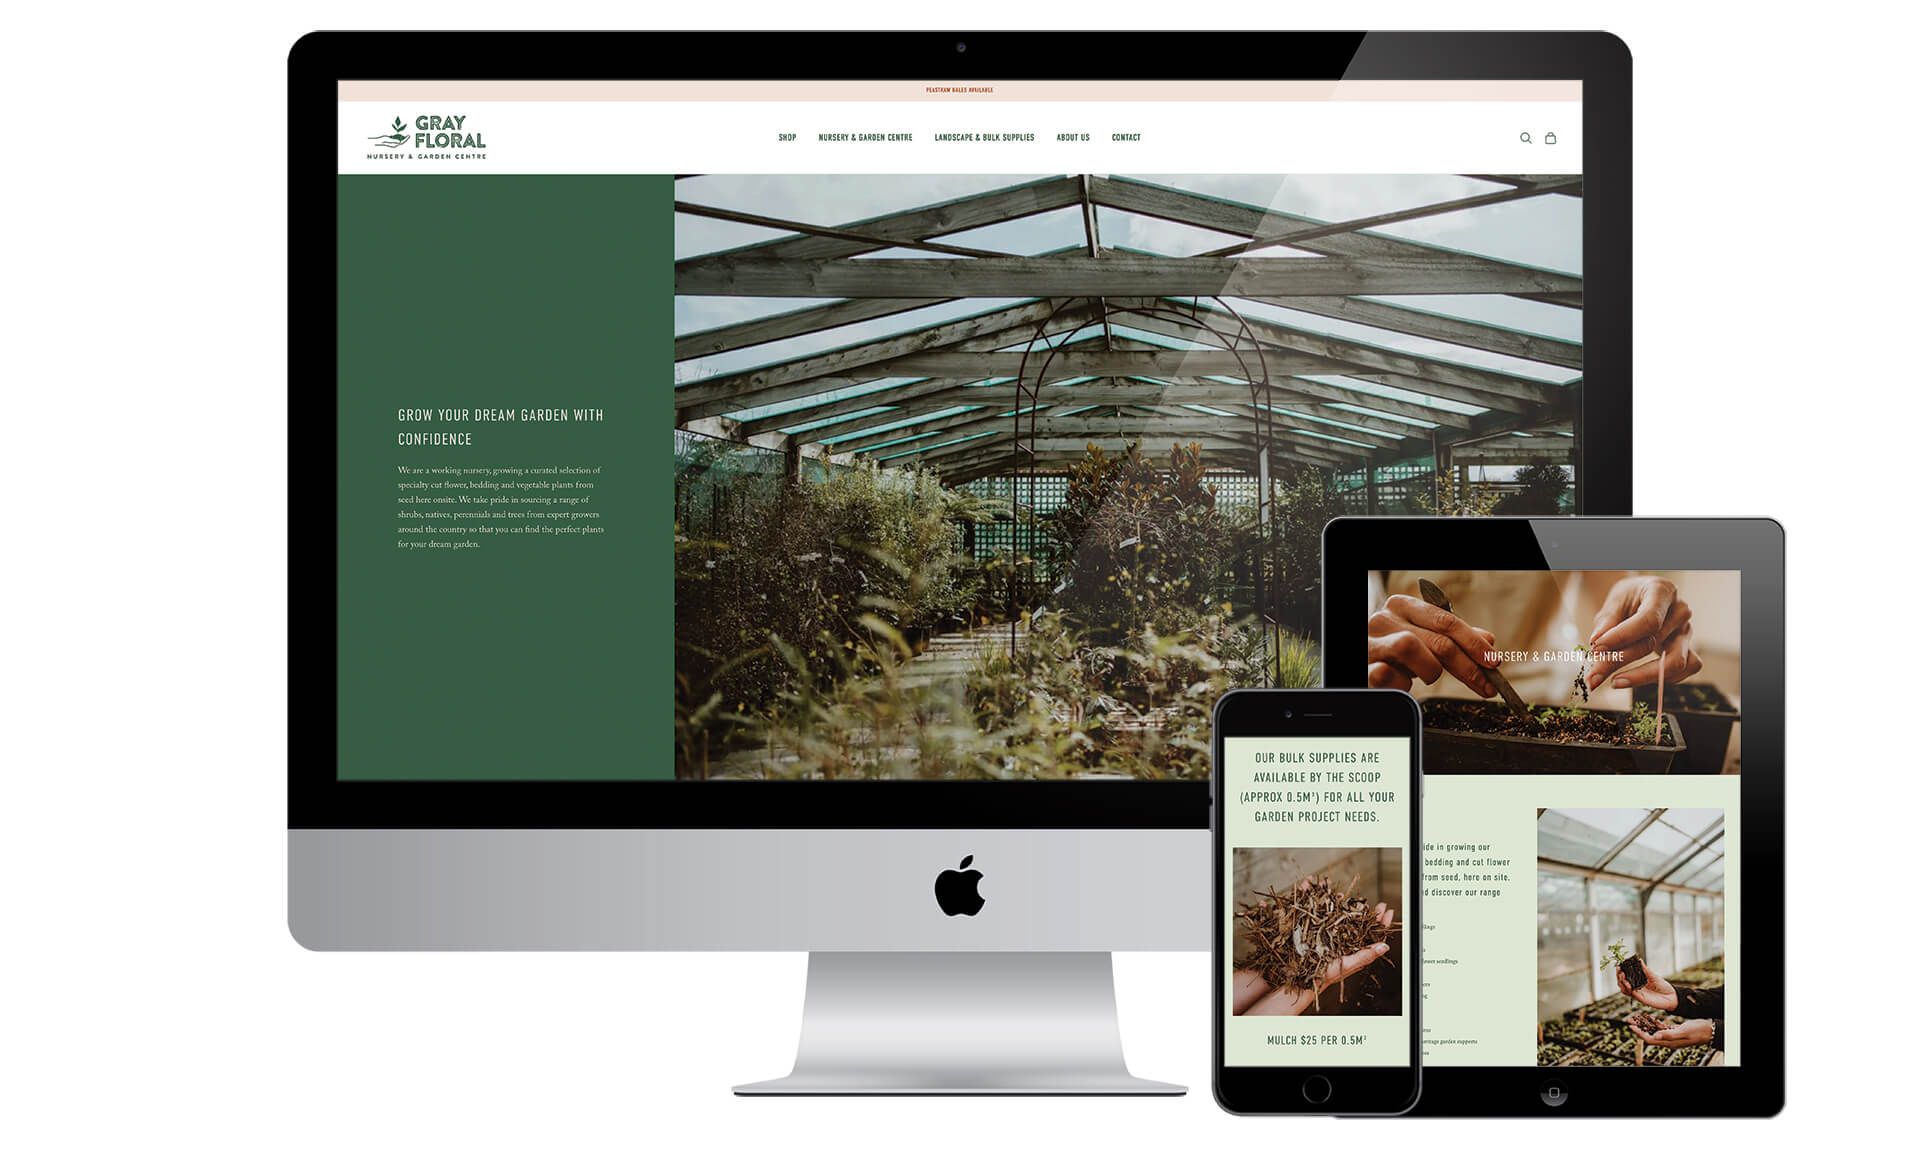 Gray Floral website designed by Vanilla Hayes creative graphic design  studio in Blenheim, Marlborough, New Zealand